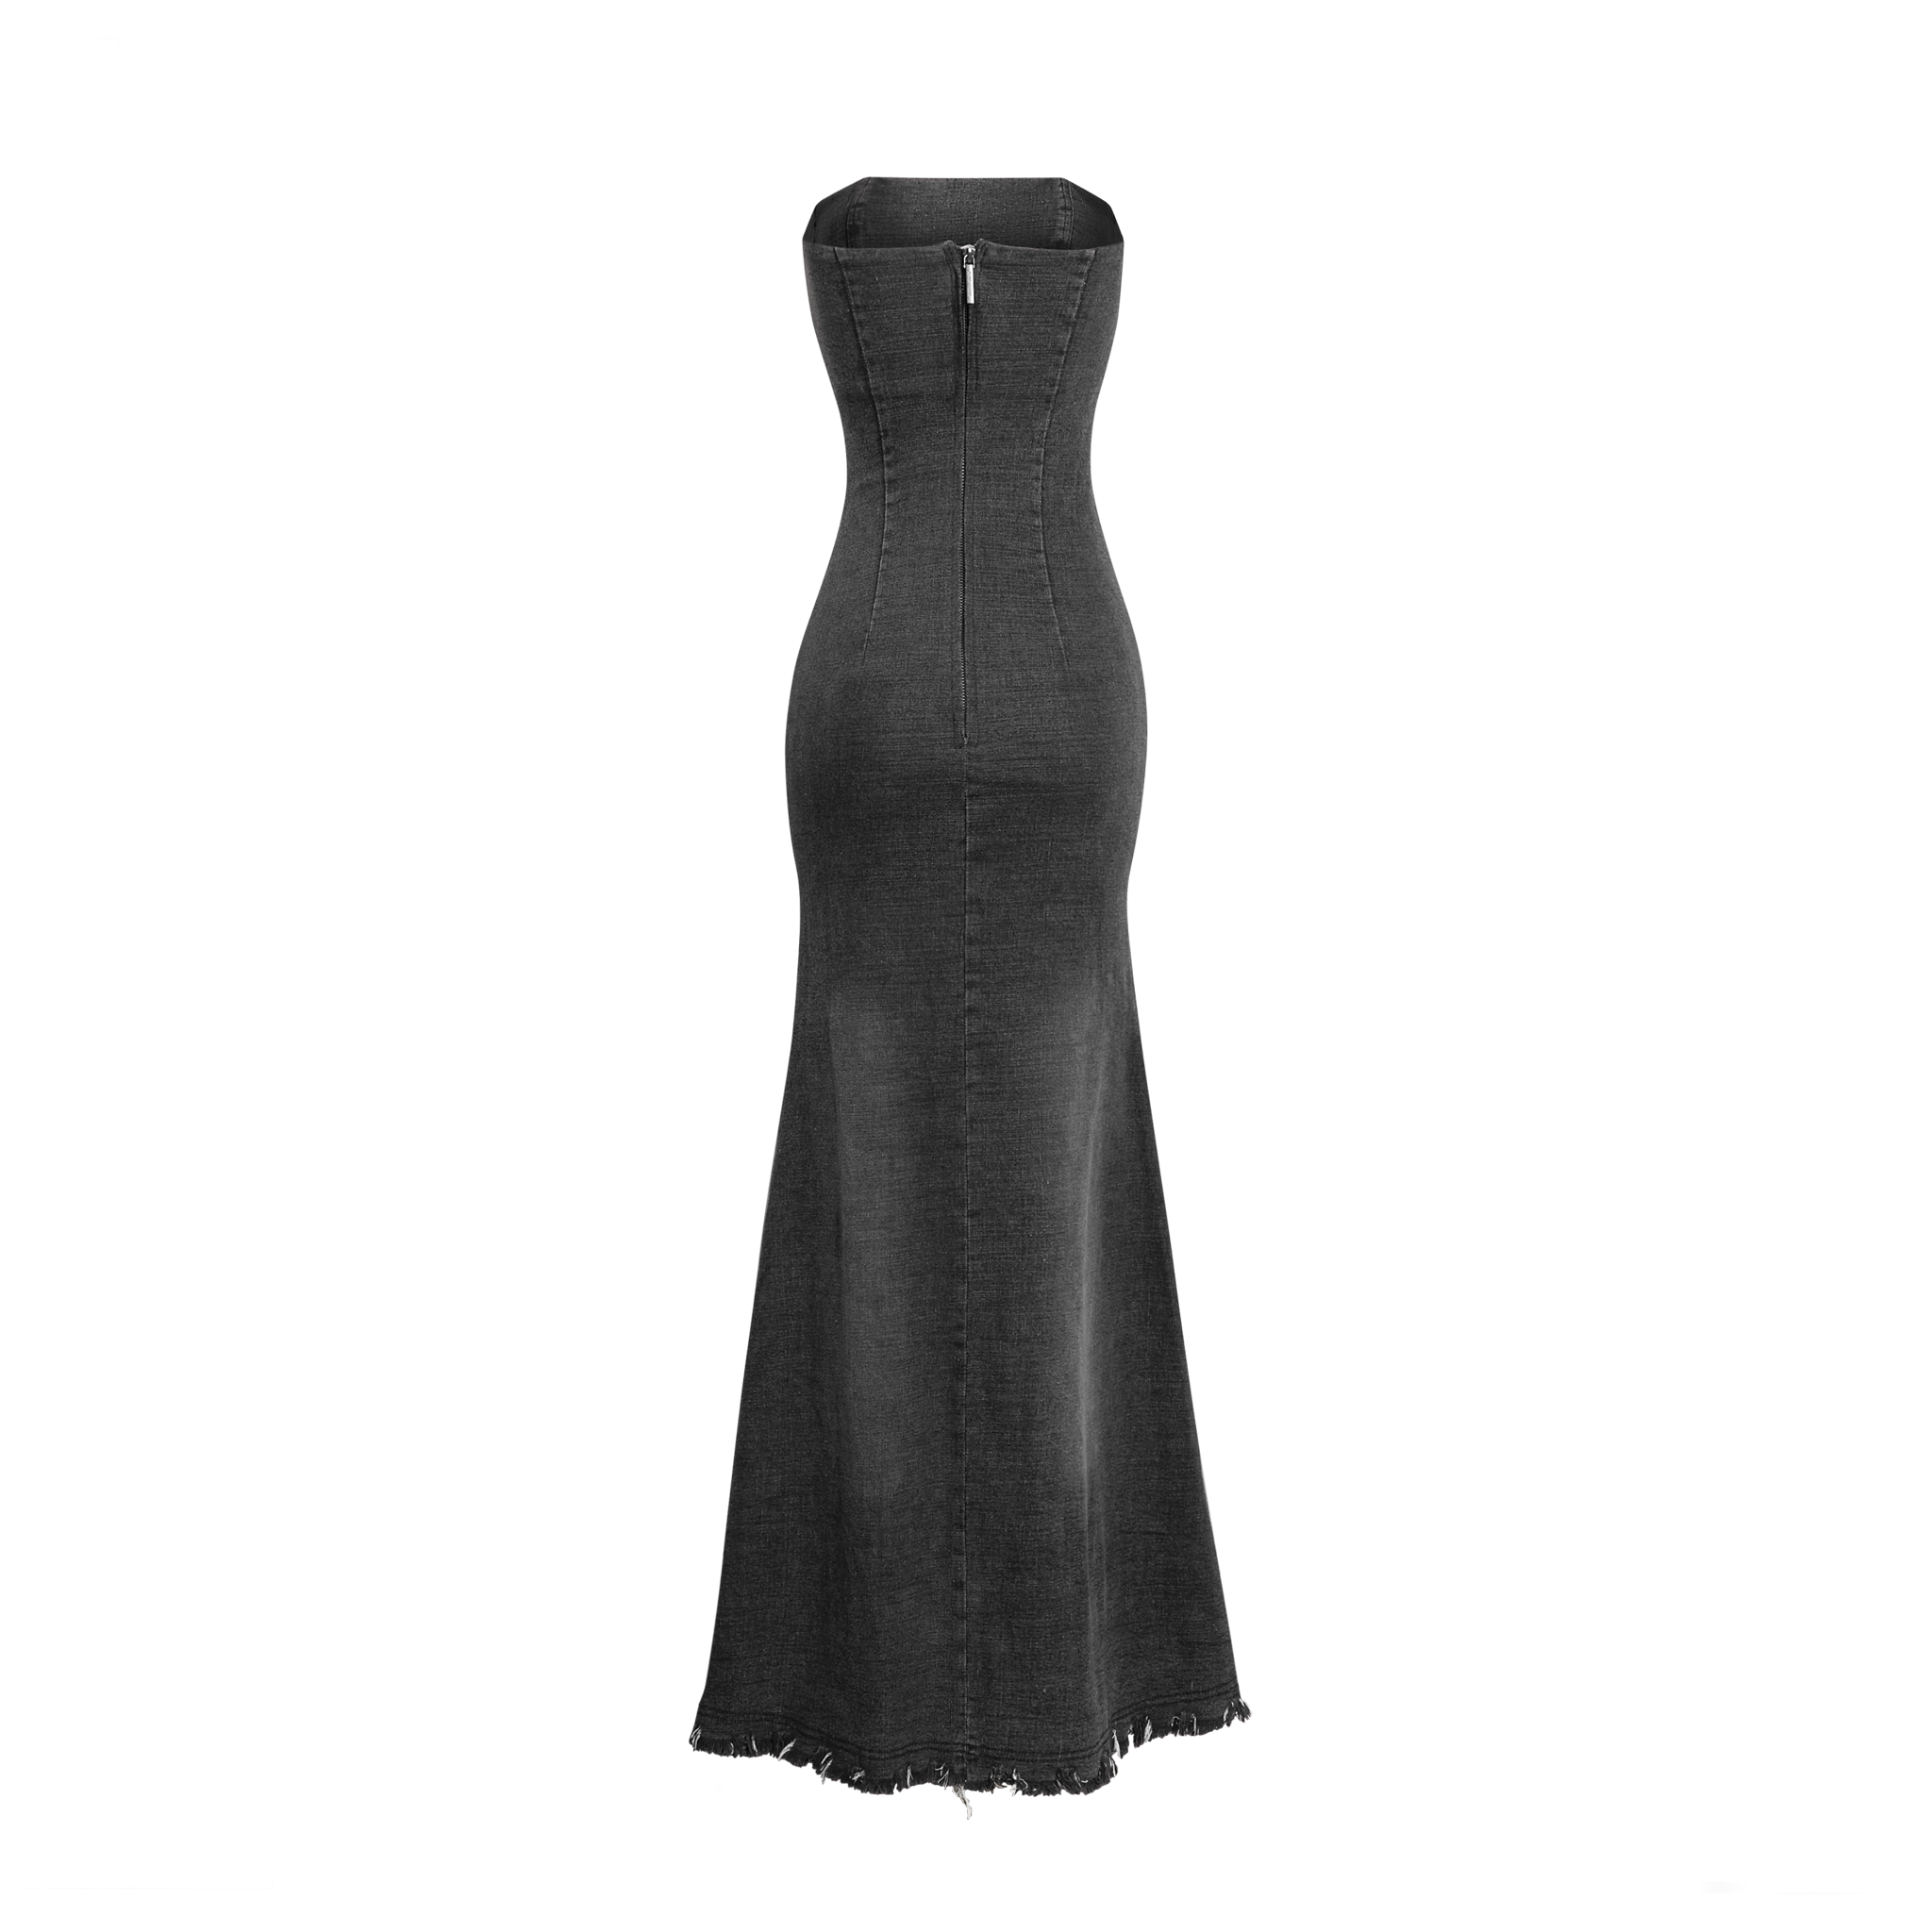 BLUM - Tube Fisht Tail Denim Dress